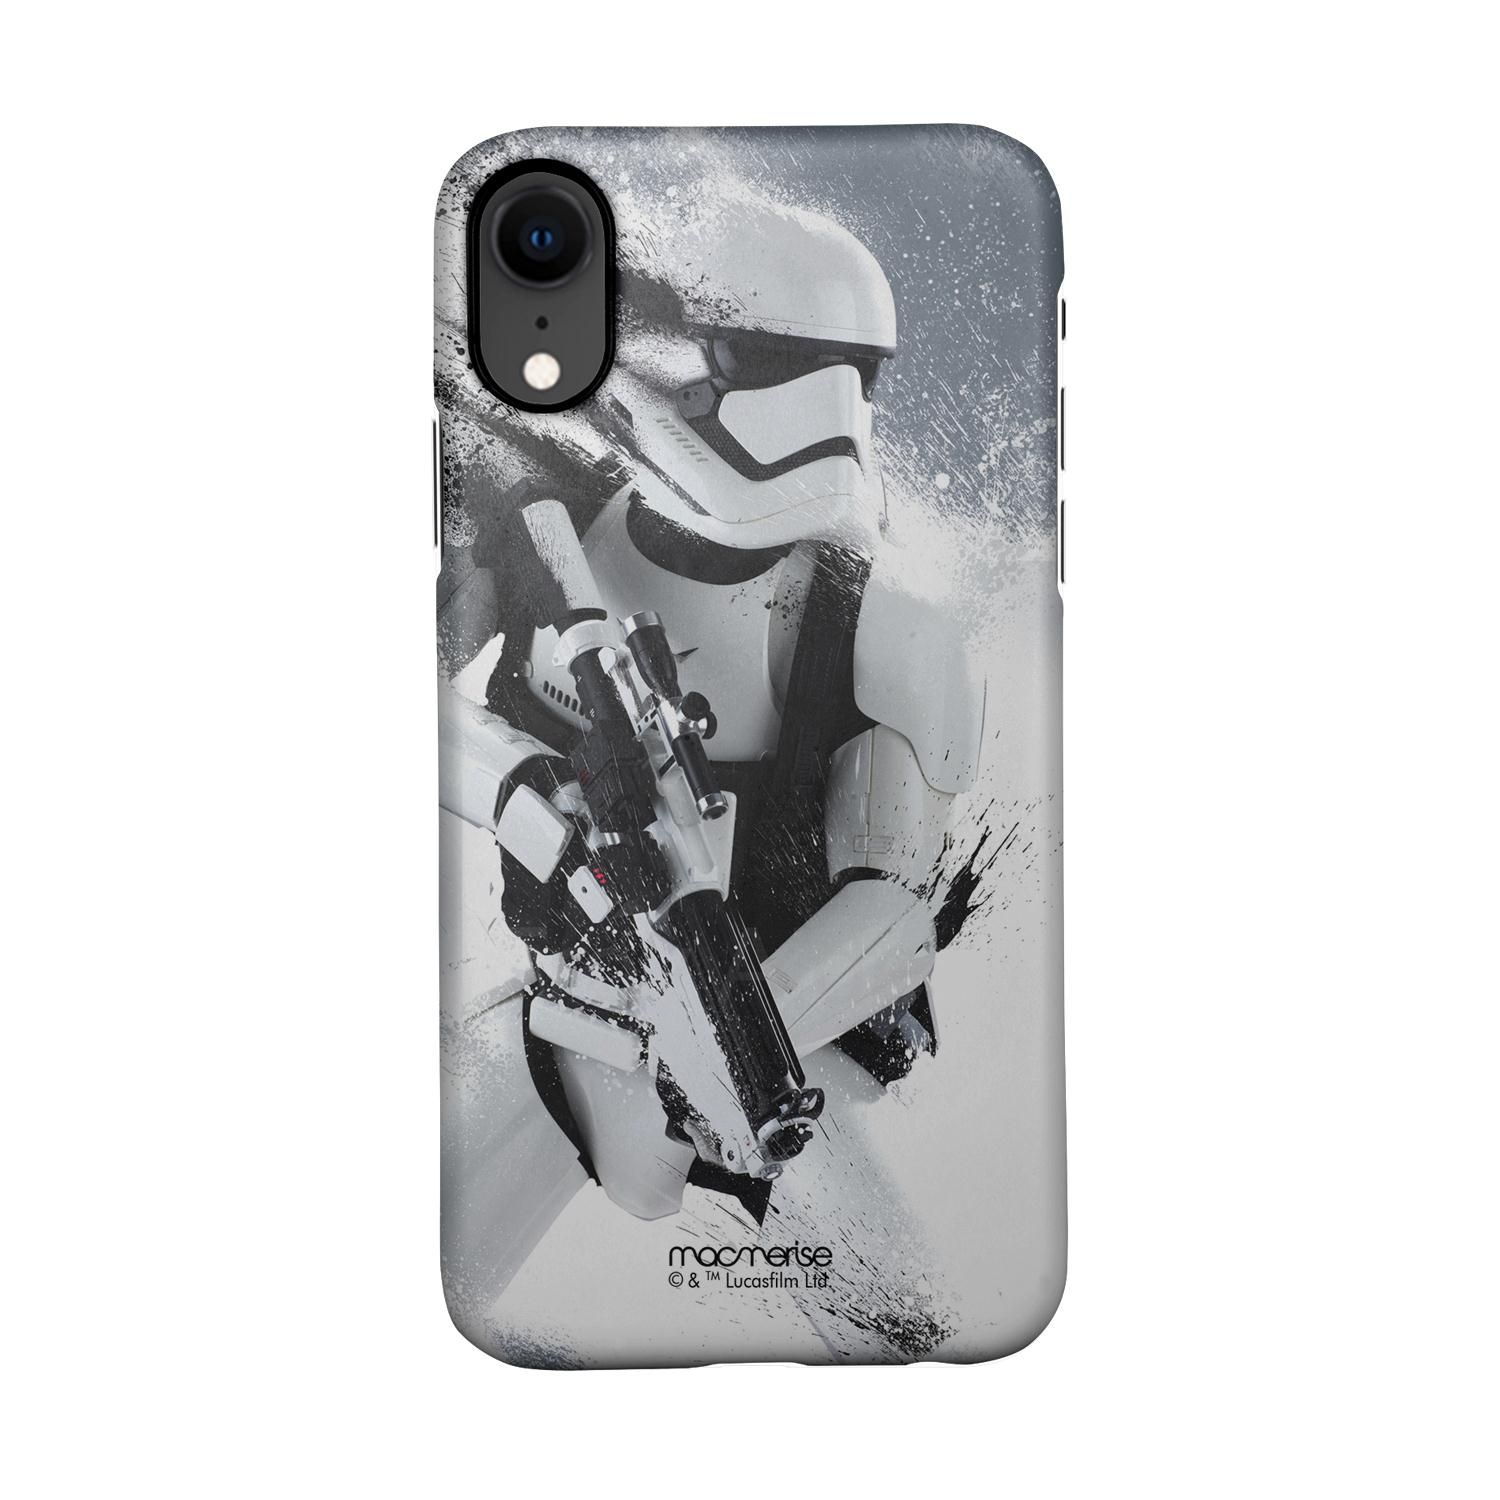 Buy Trooper Storm - Sleek Phone Case for iPhone XR Online